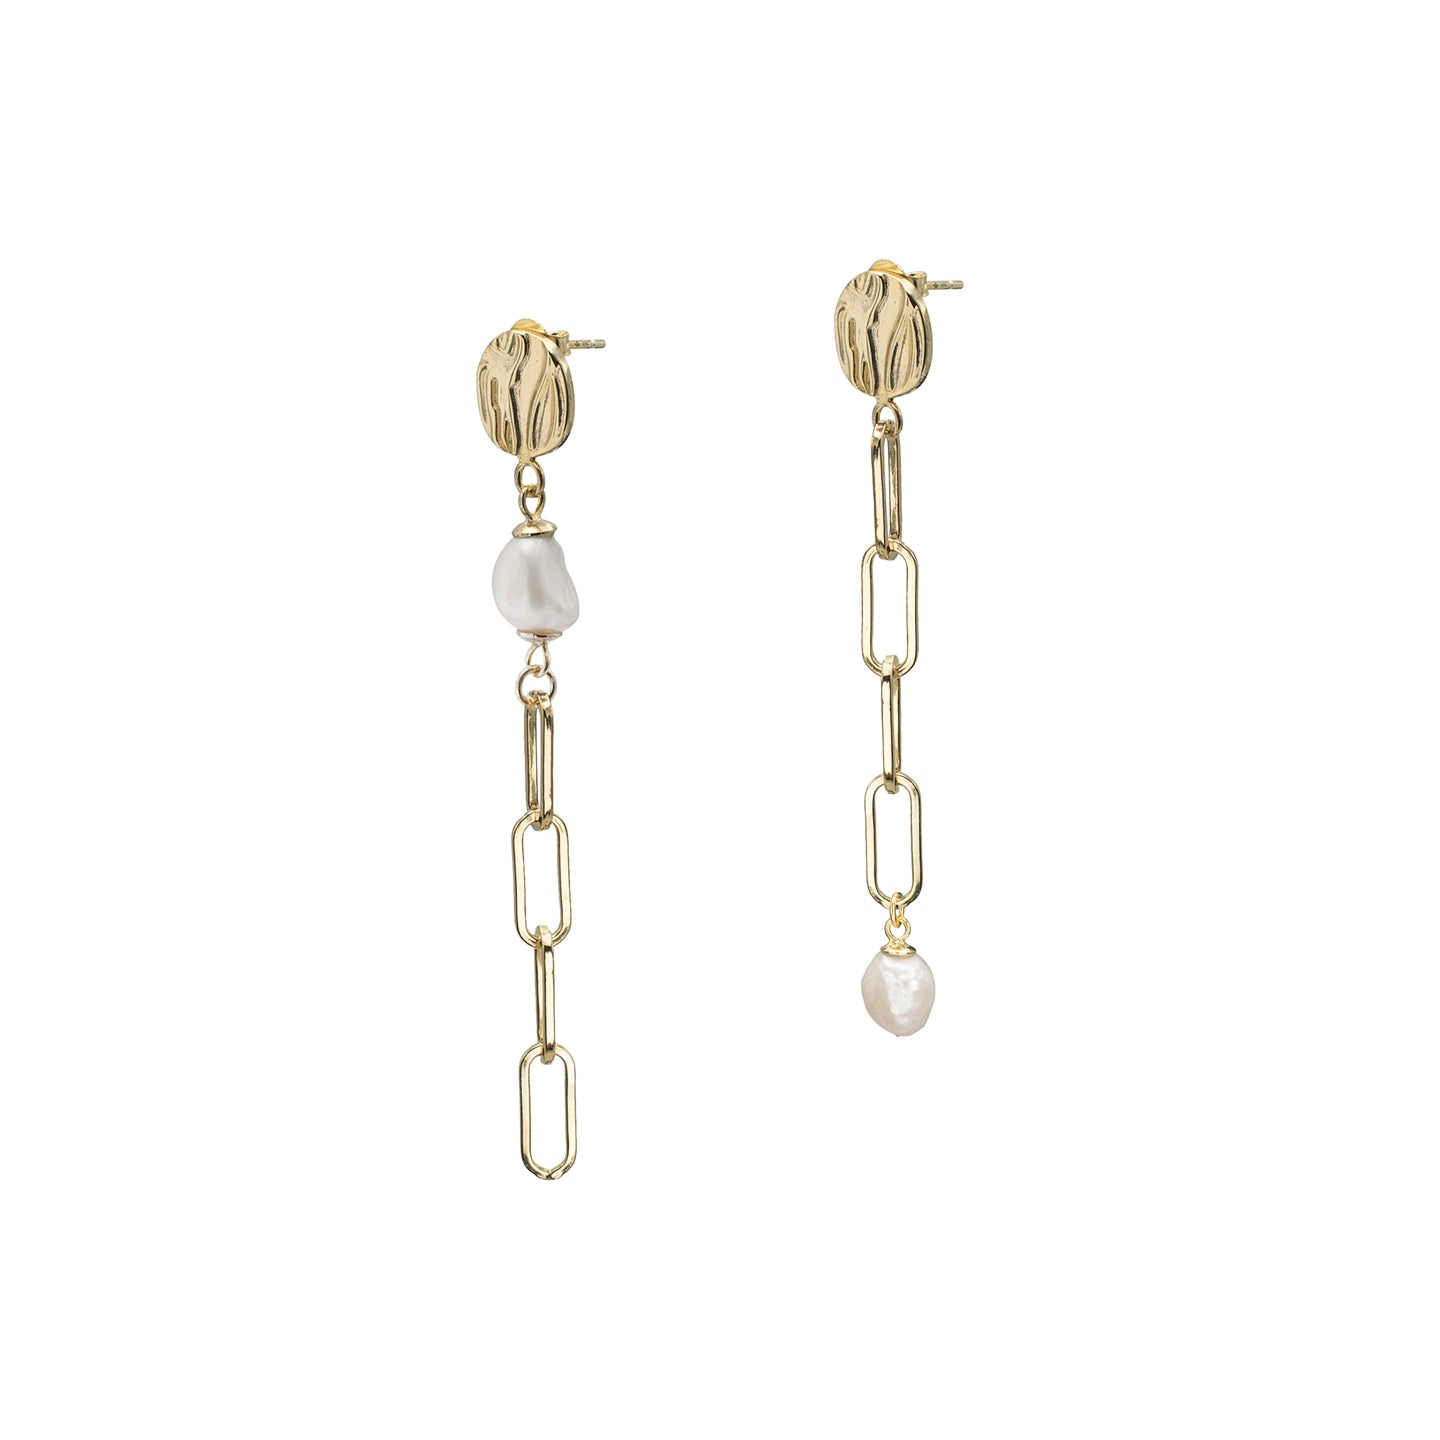 Cercei argint cu perle asimetrici Flawless - placati aur galben 18K